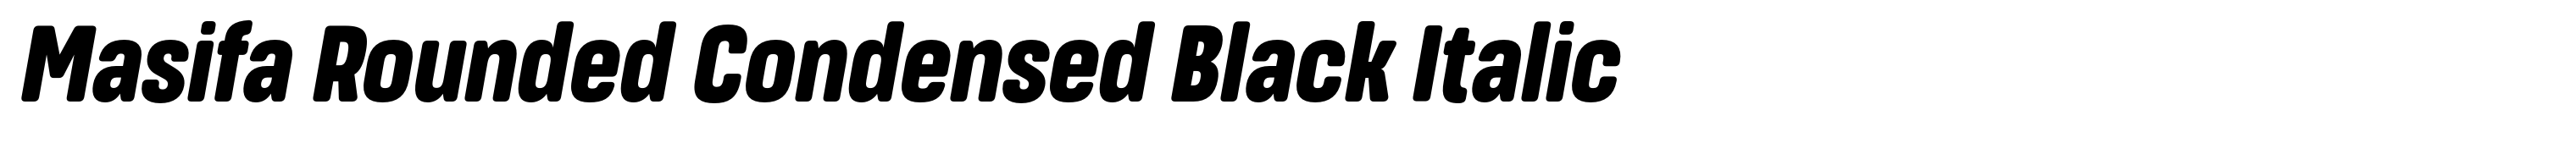 Masifa Rounded Condensed Black Italic